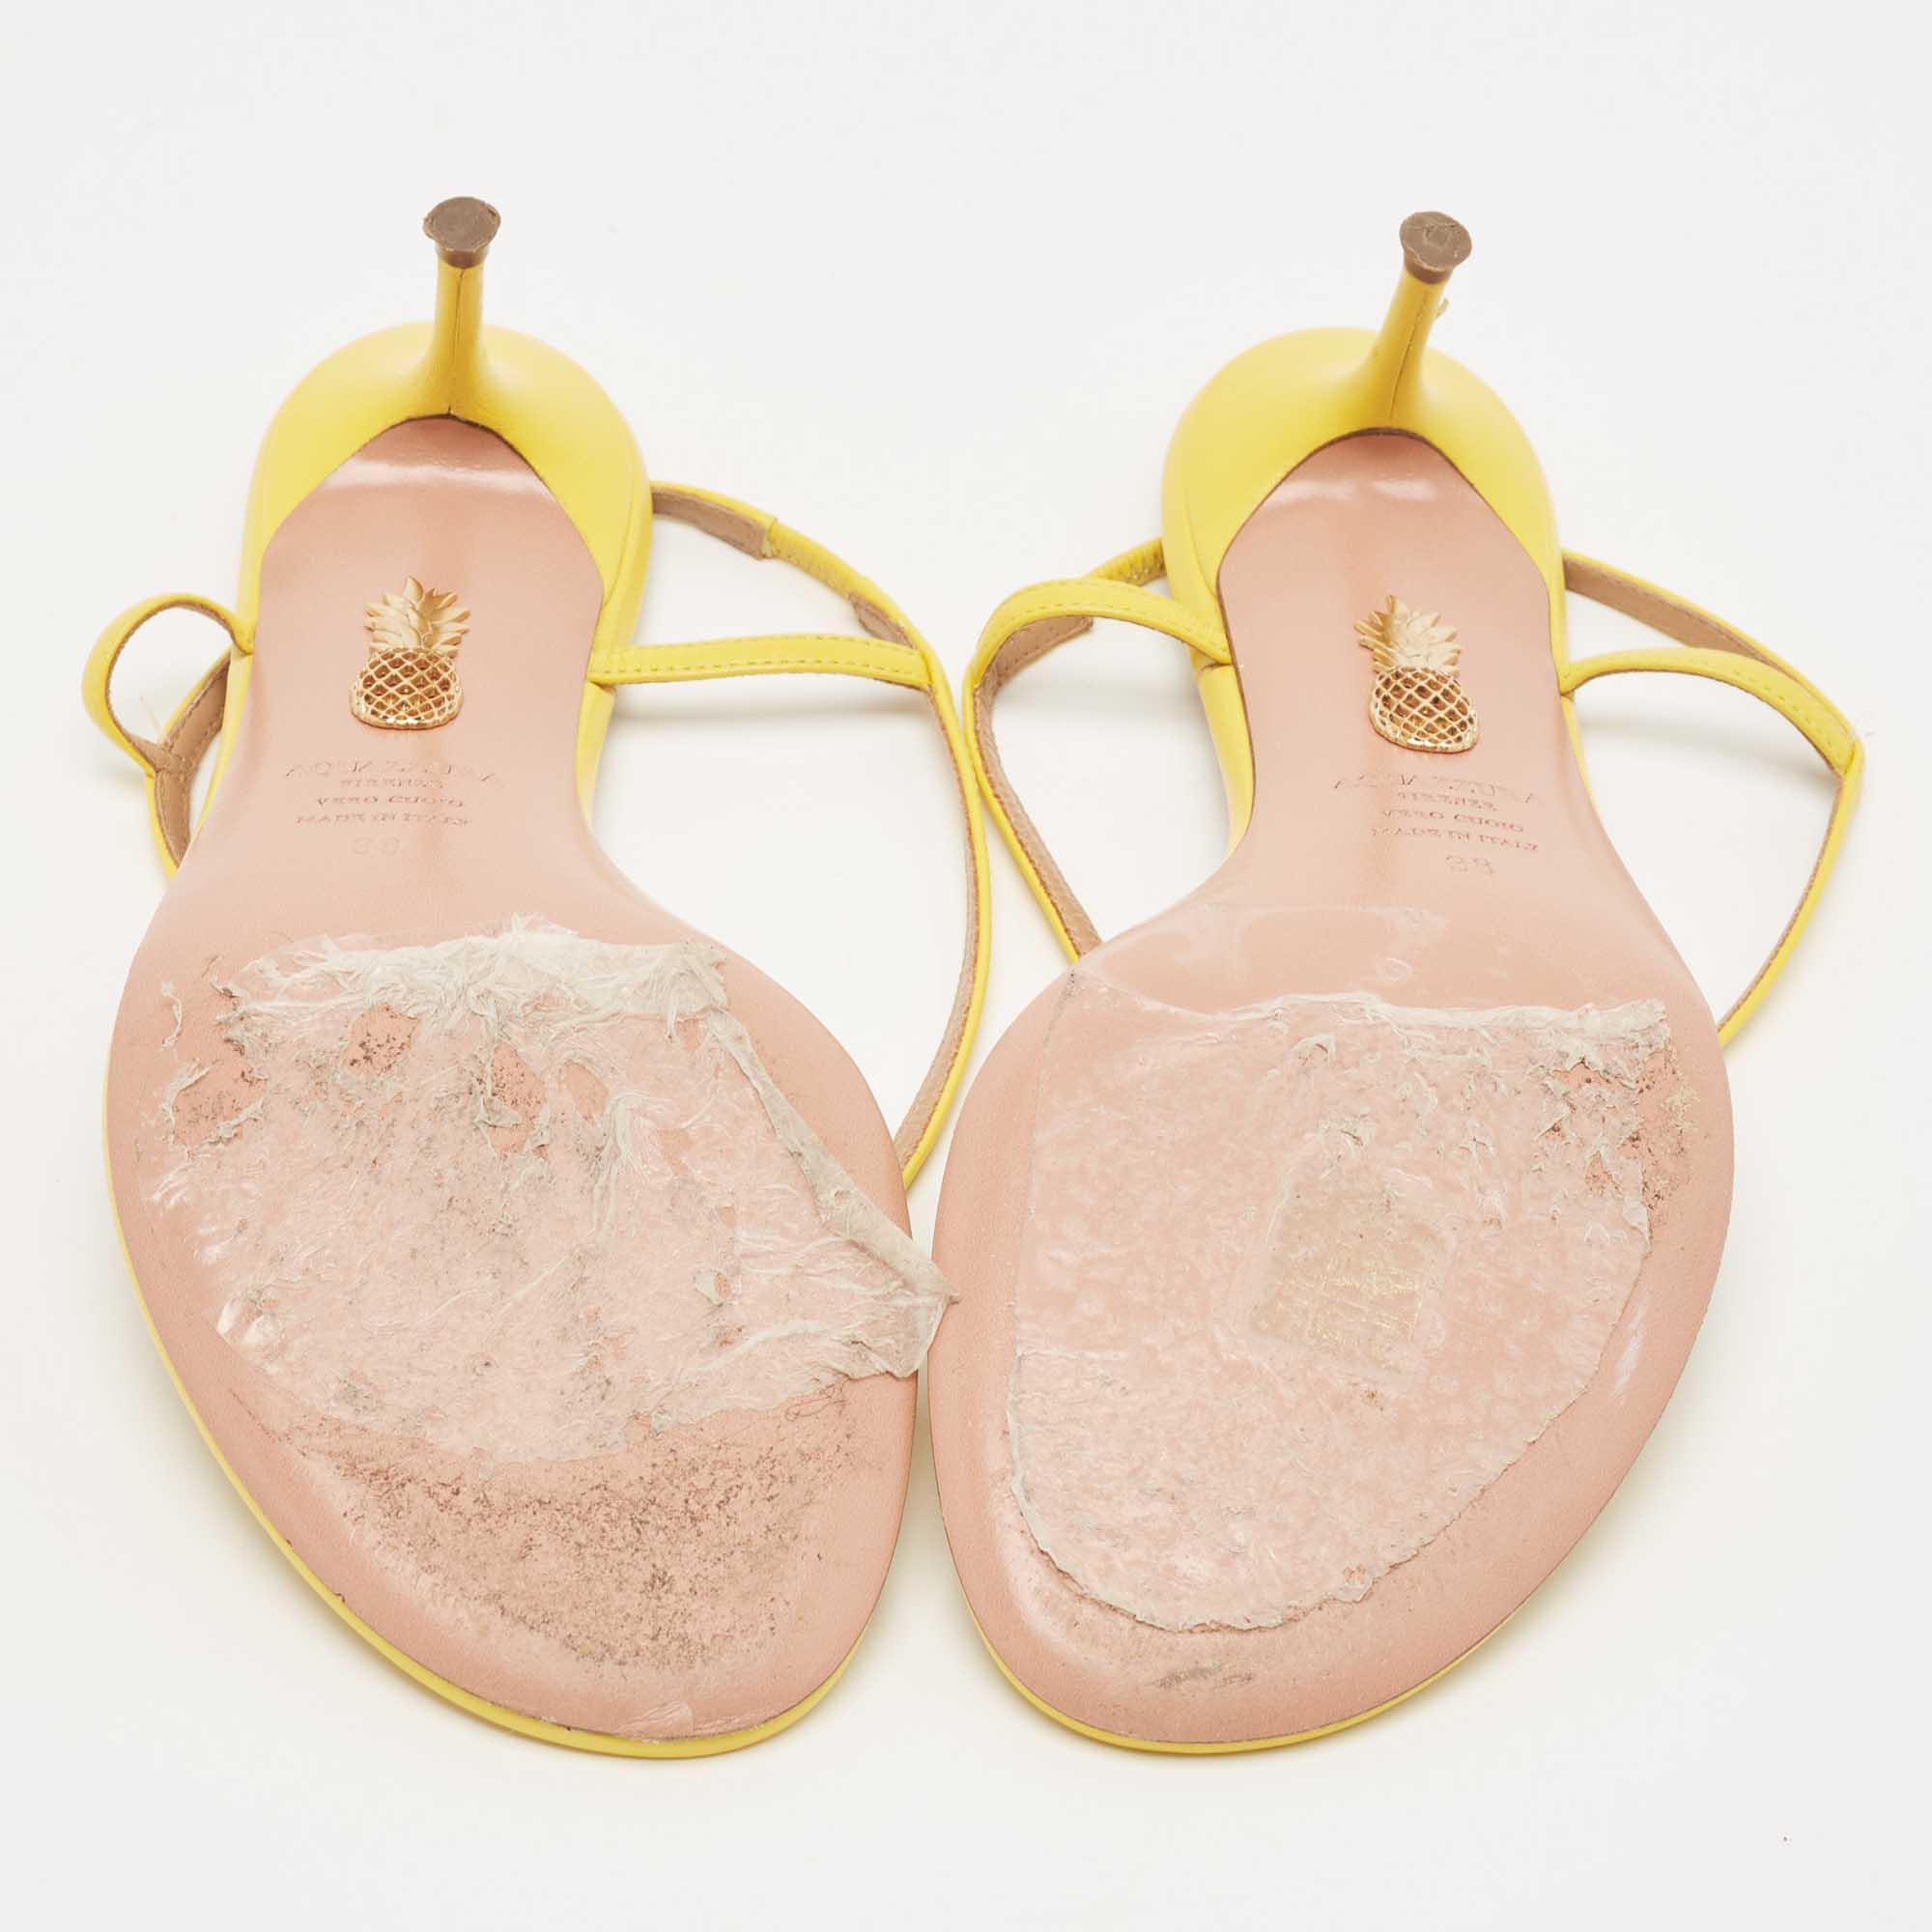 Aquazzura Yellow Leather Slingback Sandals Size 38